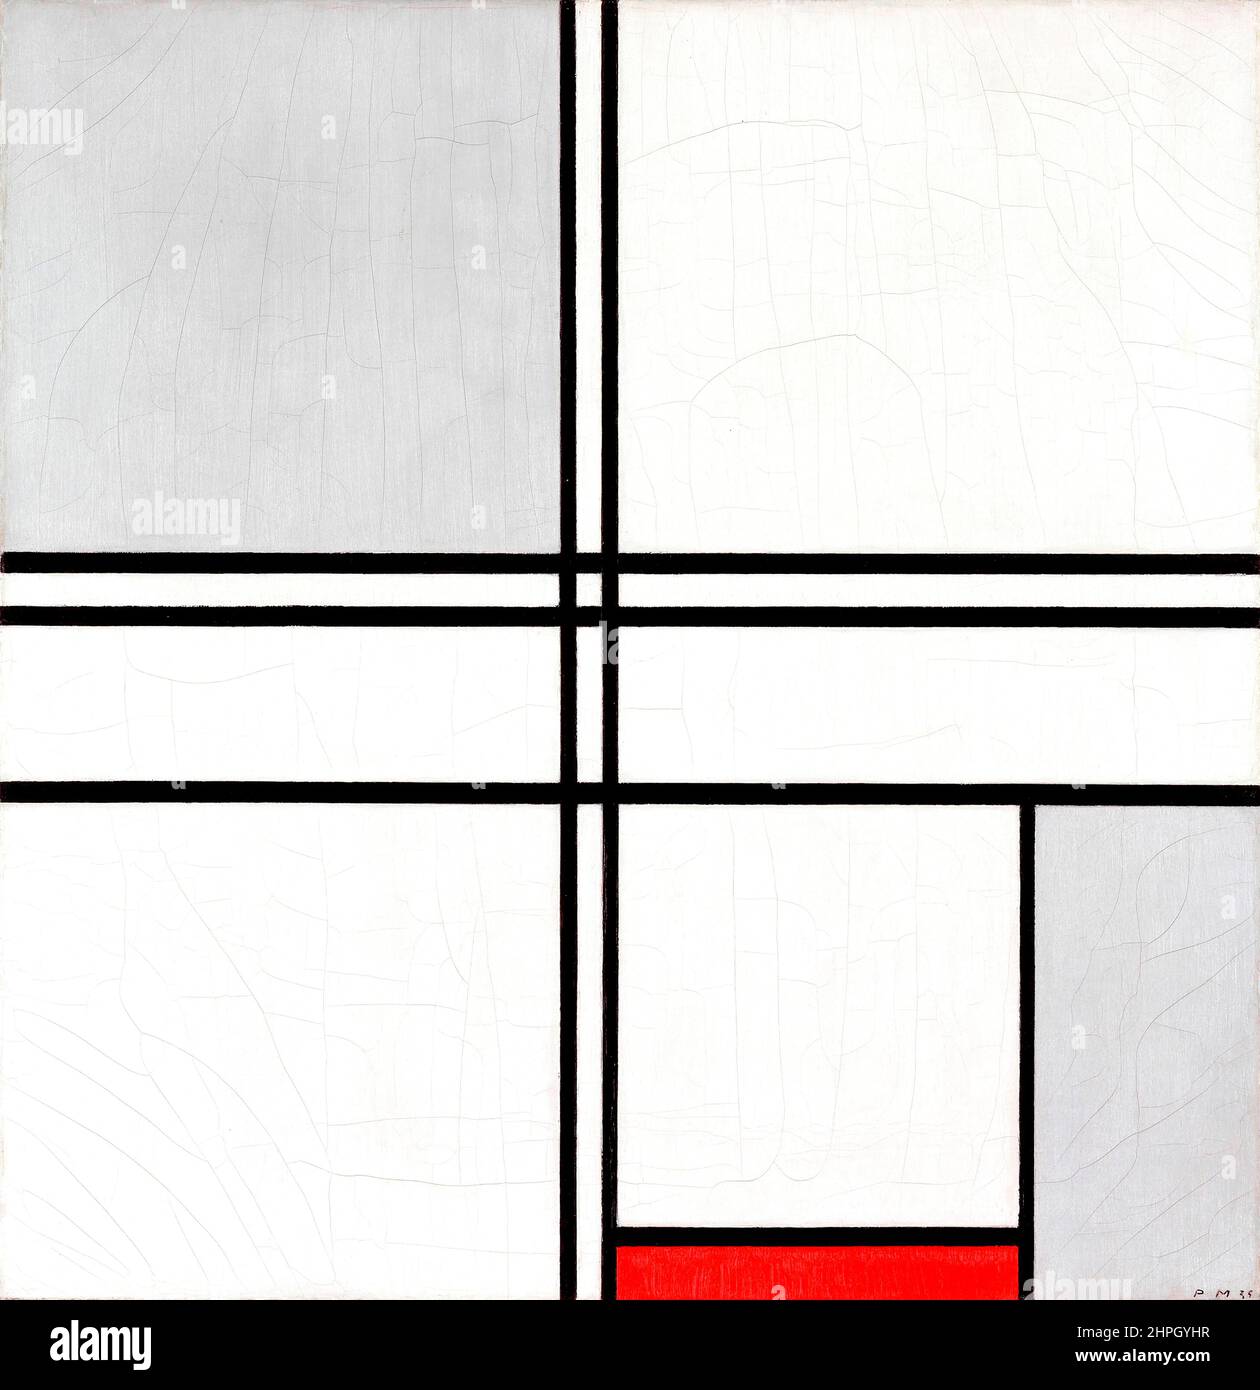 Composizione (N. 1) Grigio-Rosso di Piet Mondrian (Mondriaan) (1872-1944), olio su tela, 1935 Foto Stock